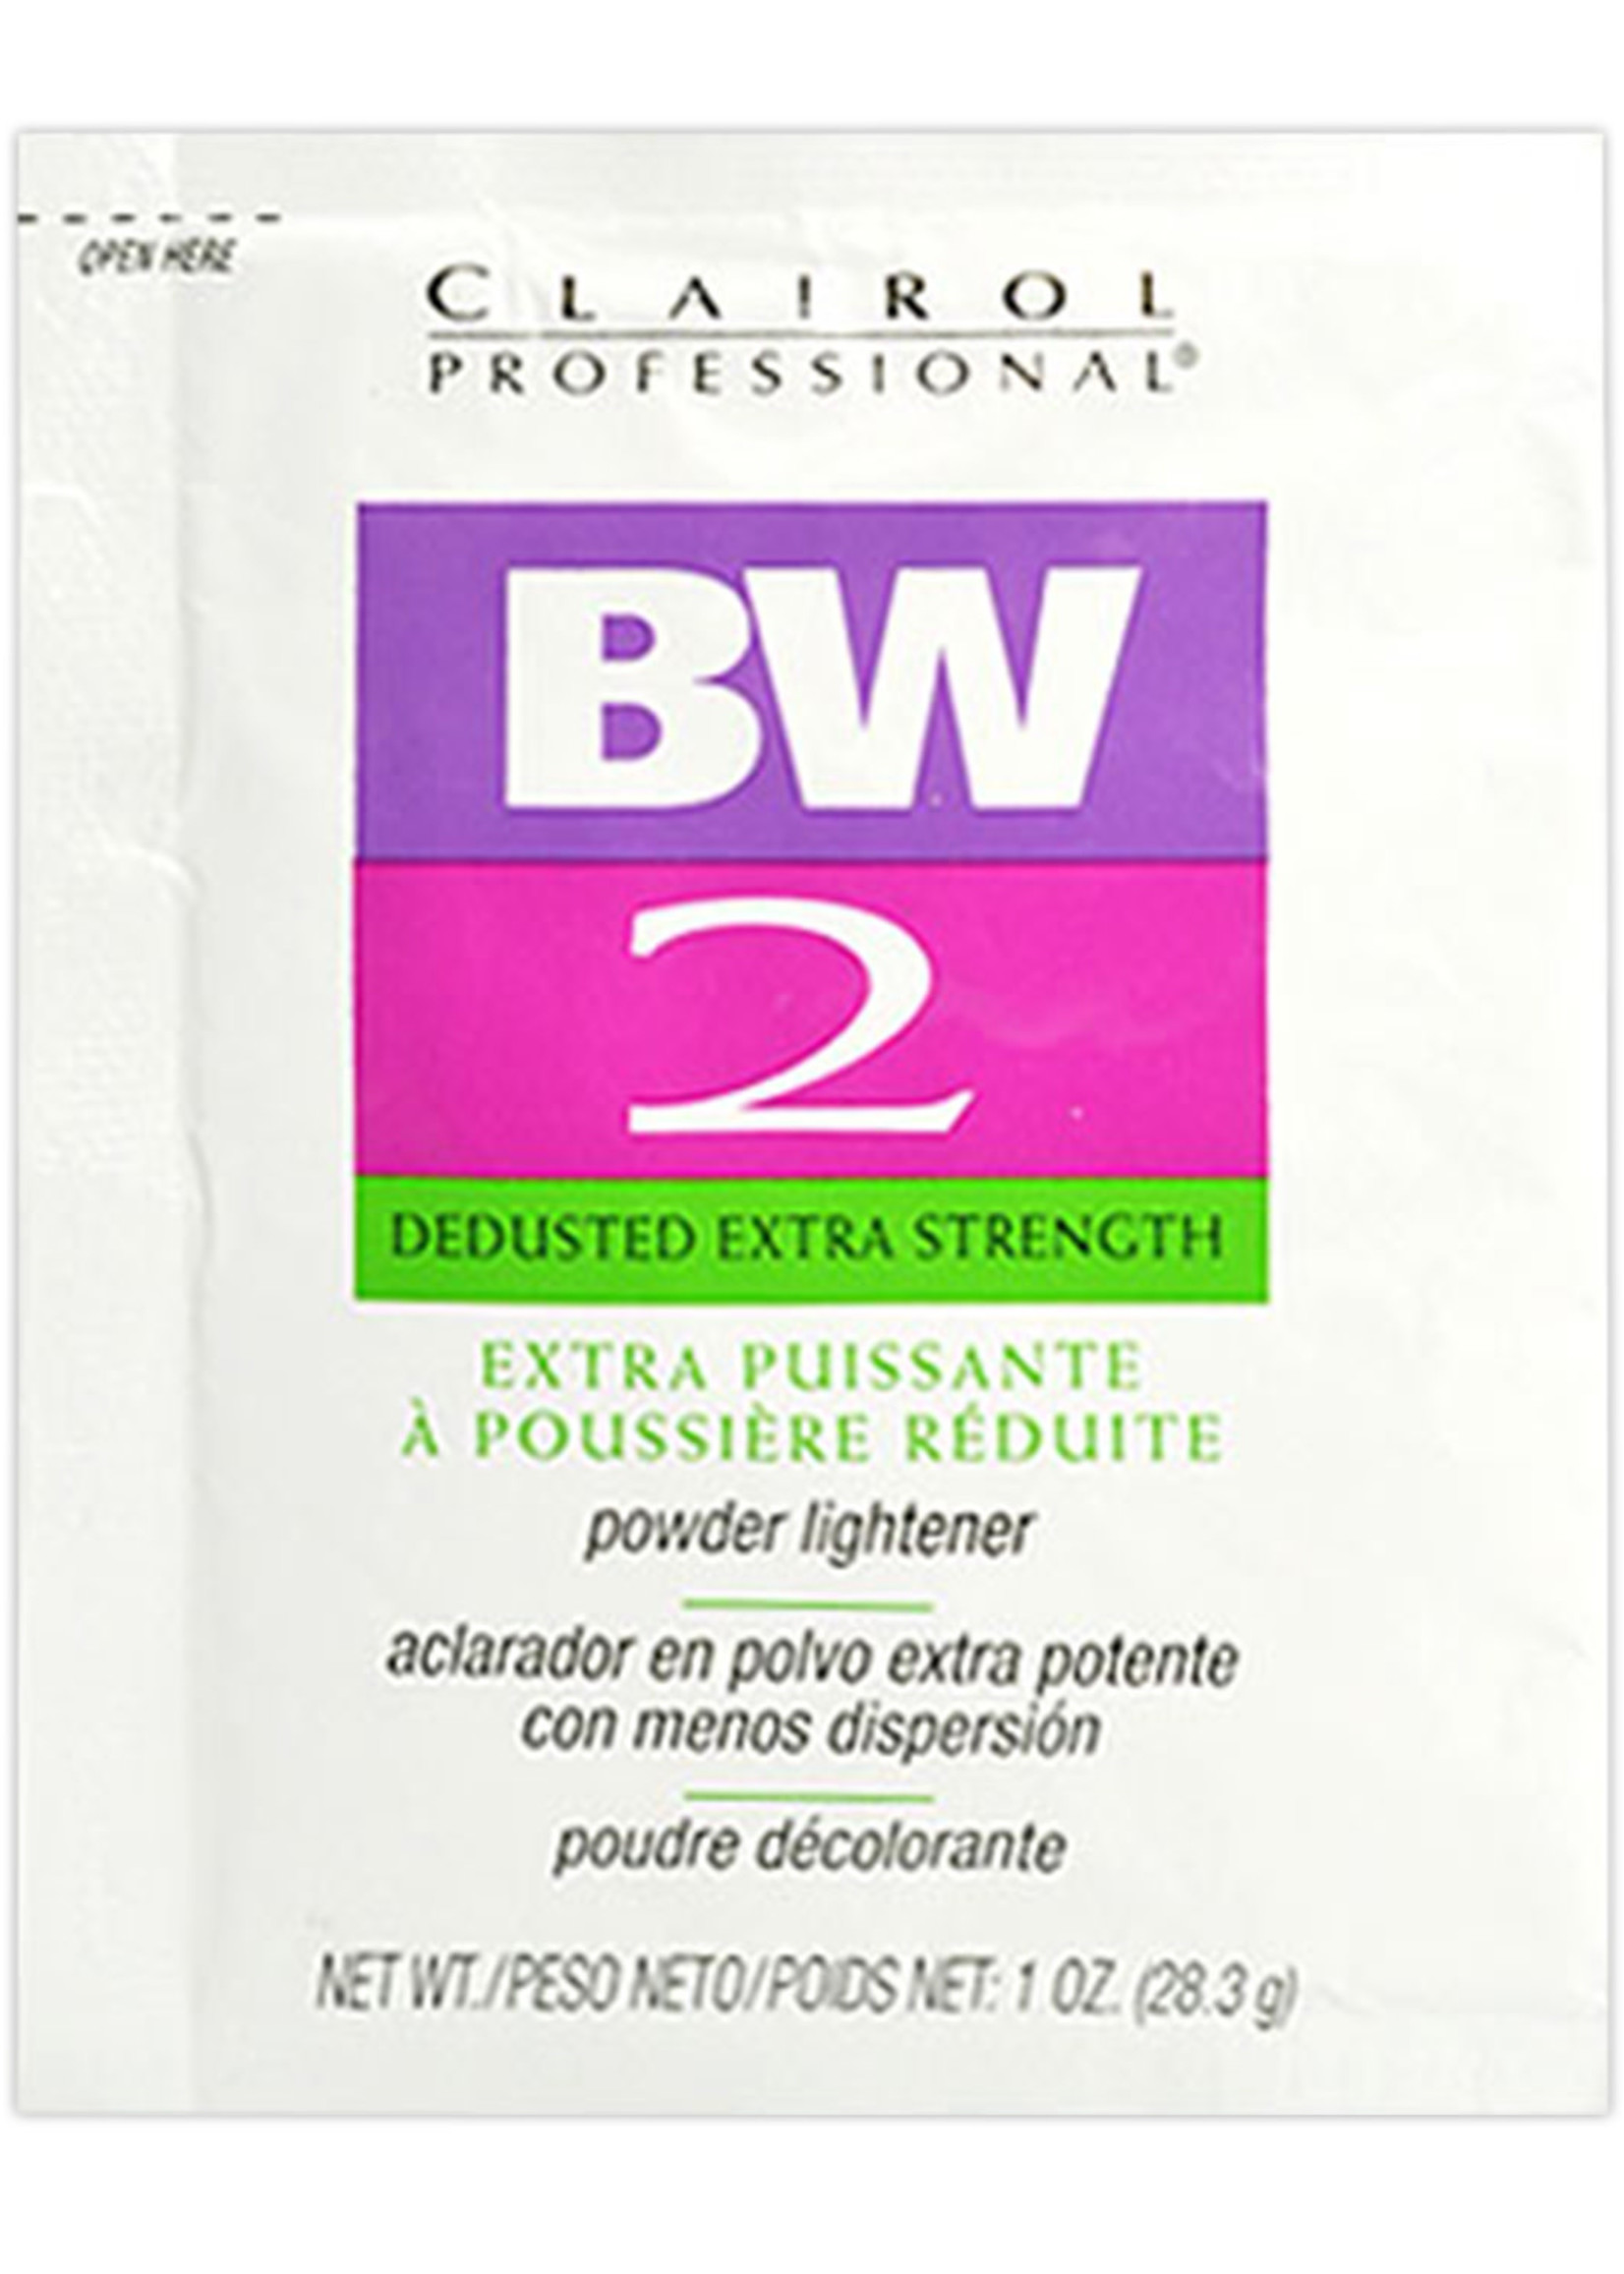 Clairol Professional BW 2 Dedusted Extra Strength Powder Lightener (1 oz)